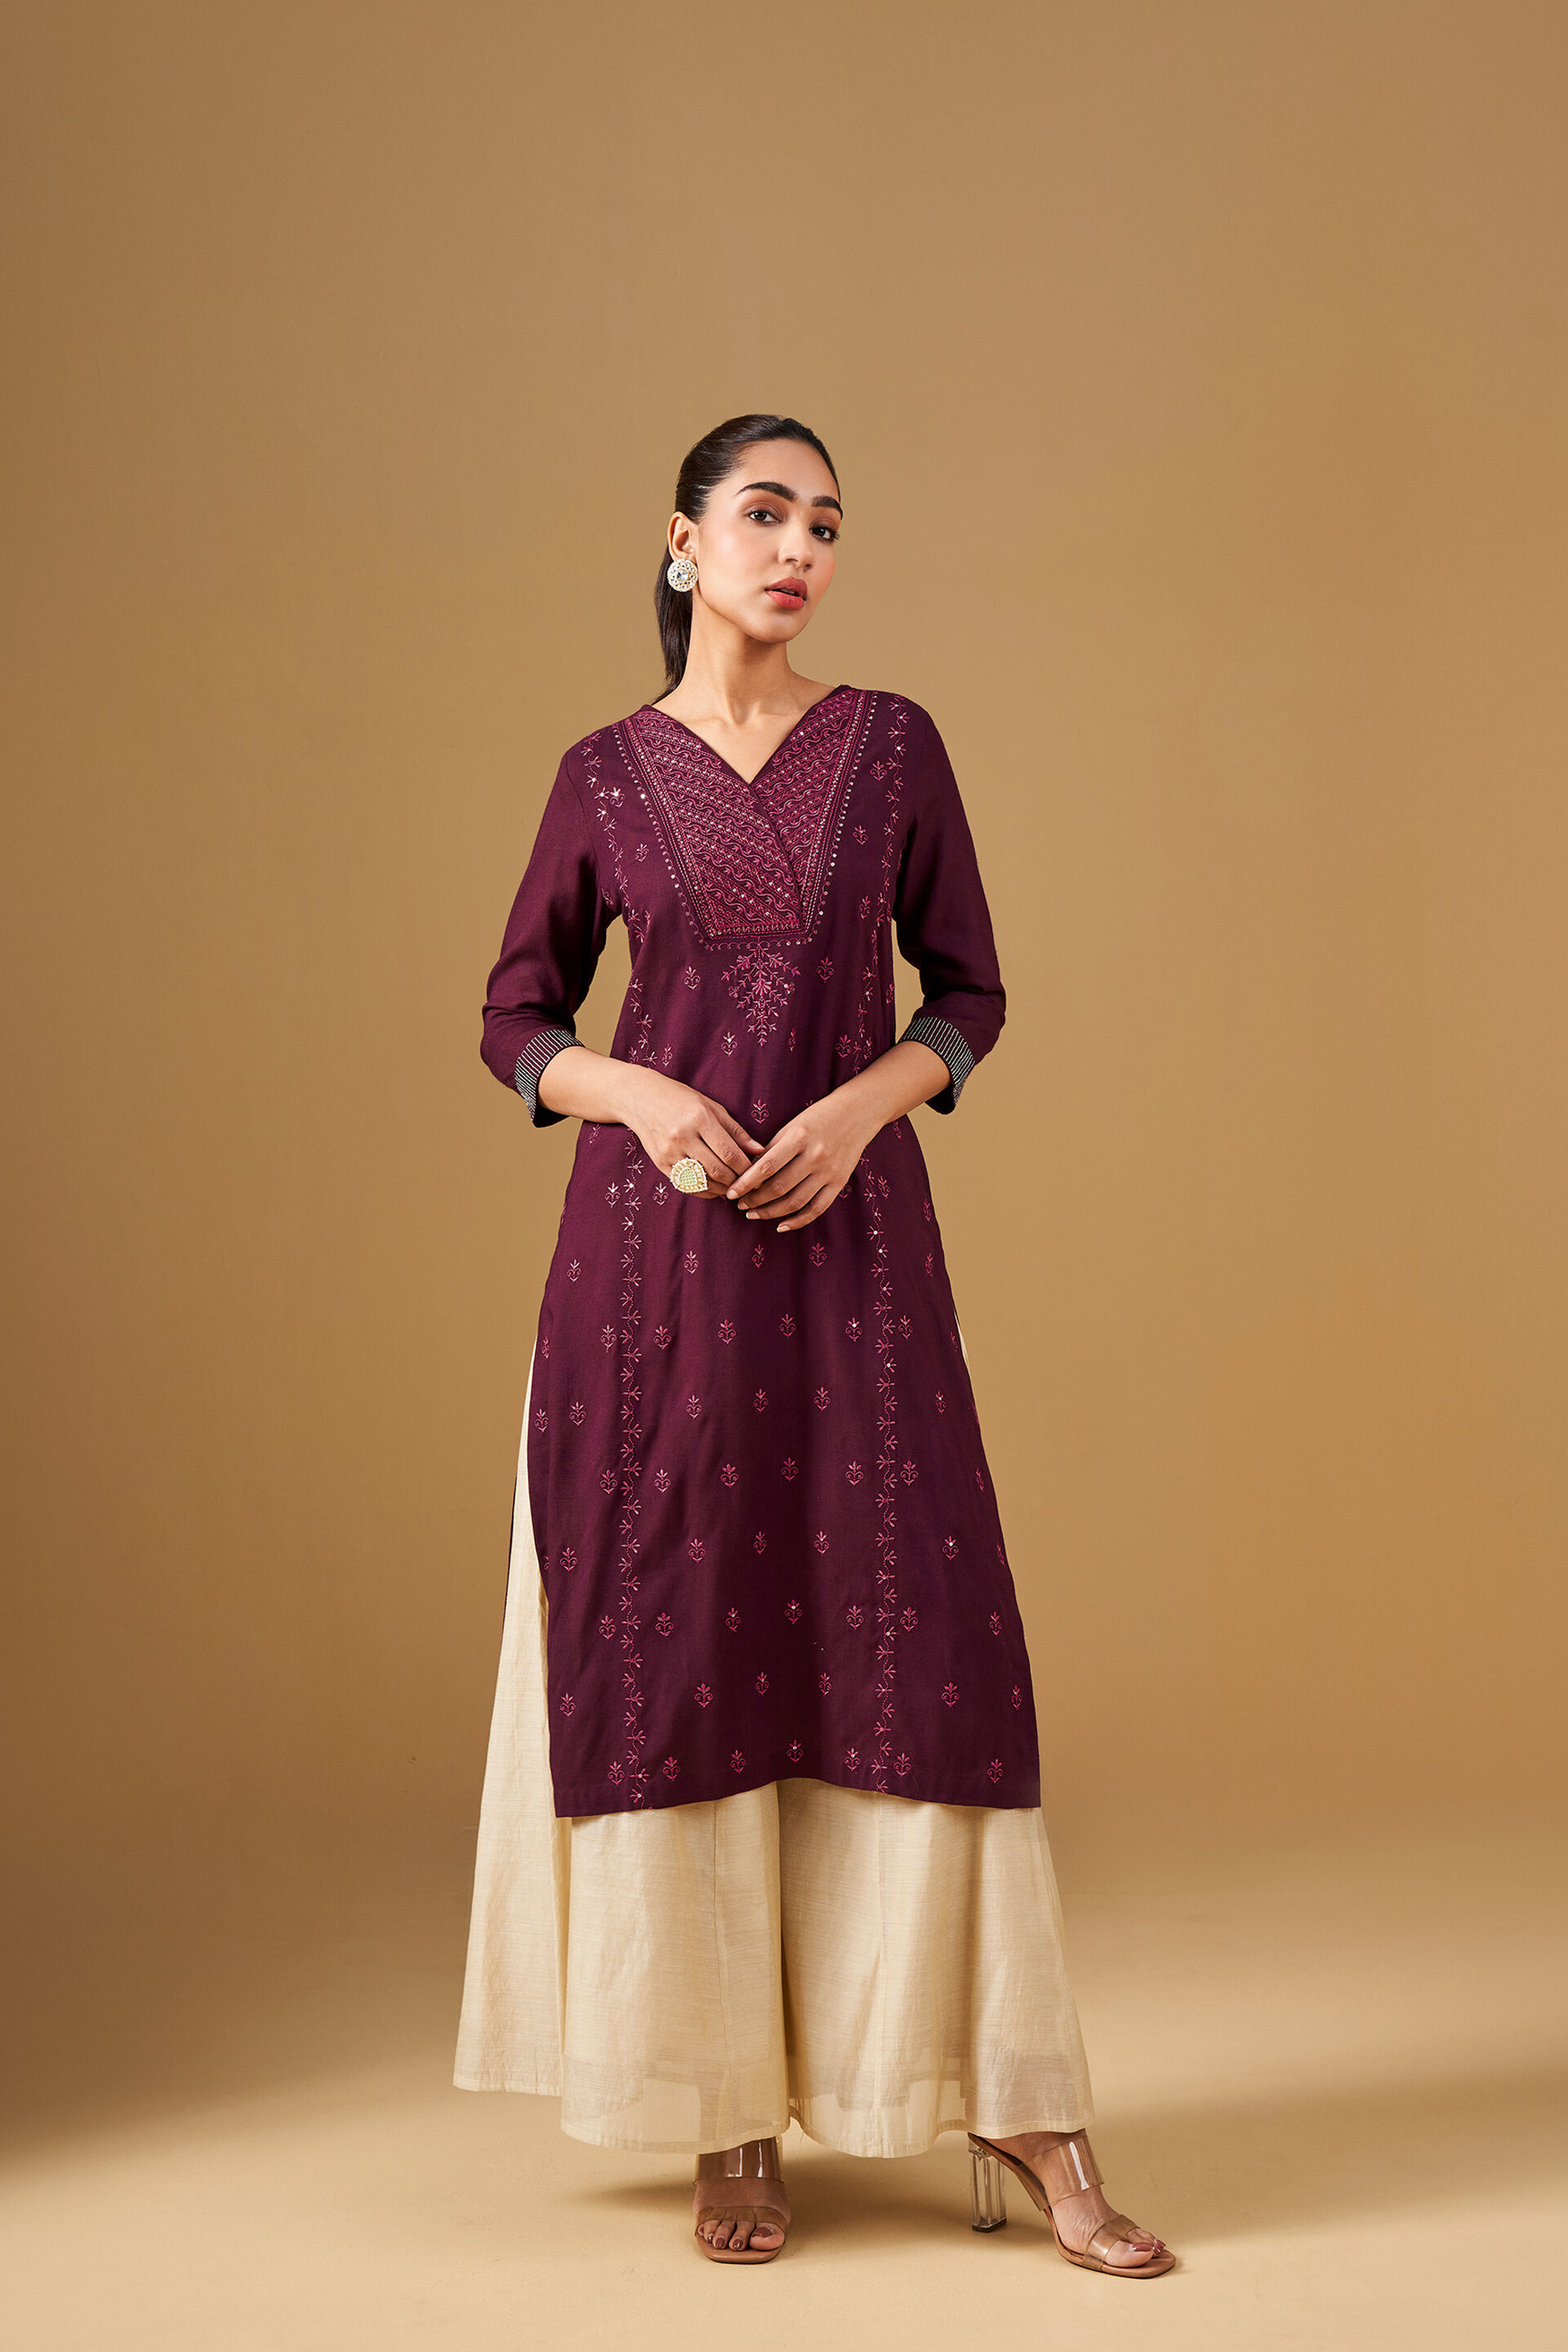 Amazon.com: Marusthali indian kurtis for women, Naira Cut Rayon Gota Patti  Work Kurta Pant Set Red Black, Designer Kurti top tunic (L) : Handmade  Products